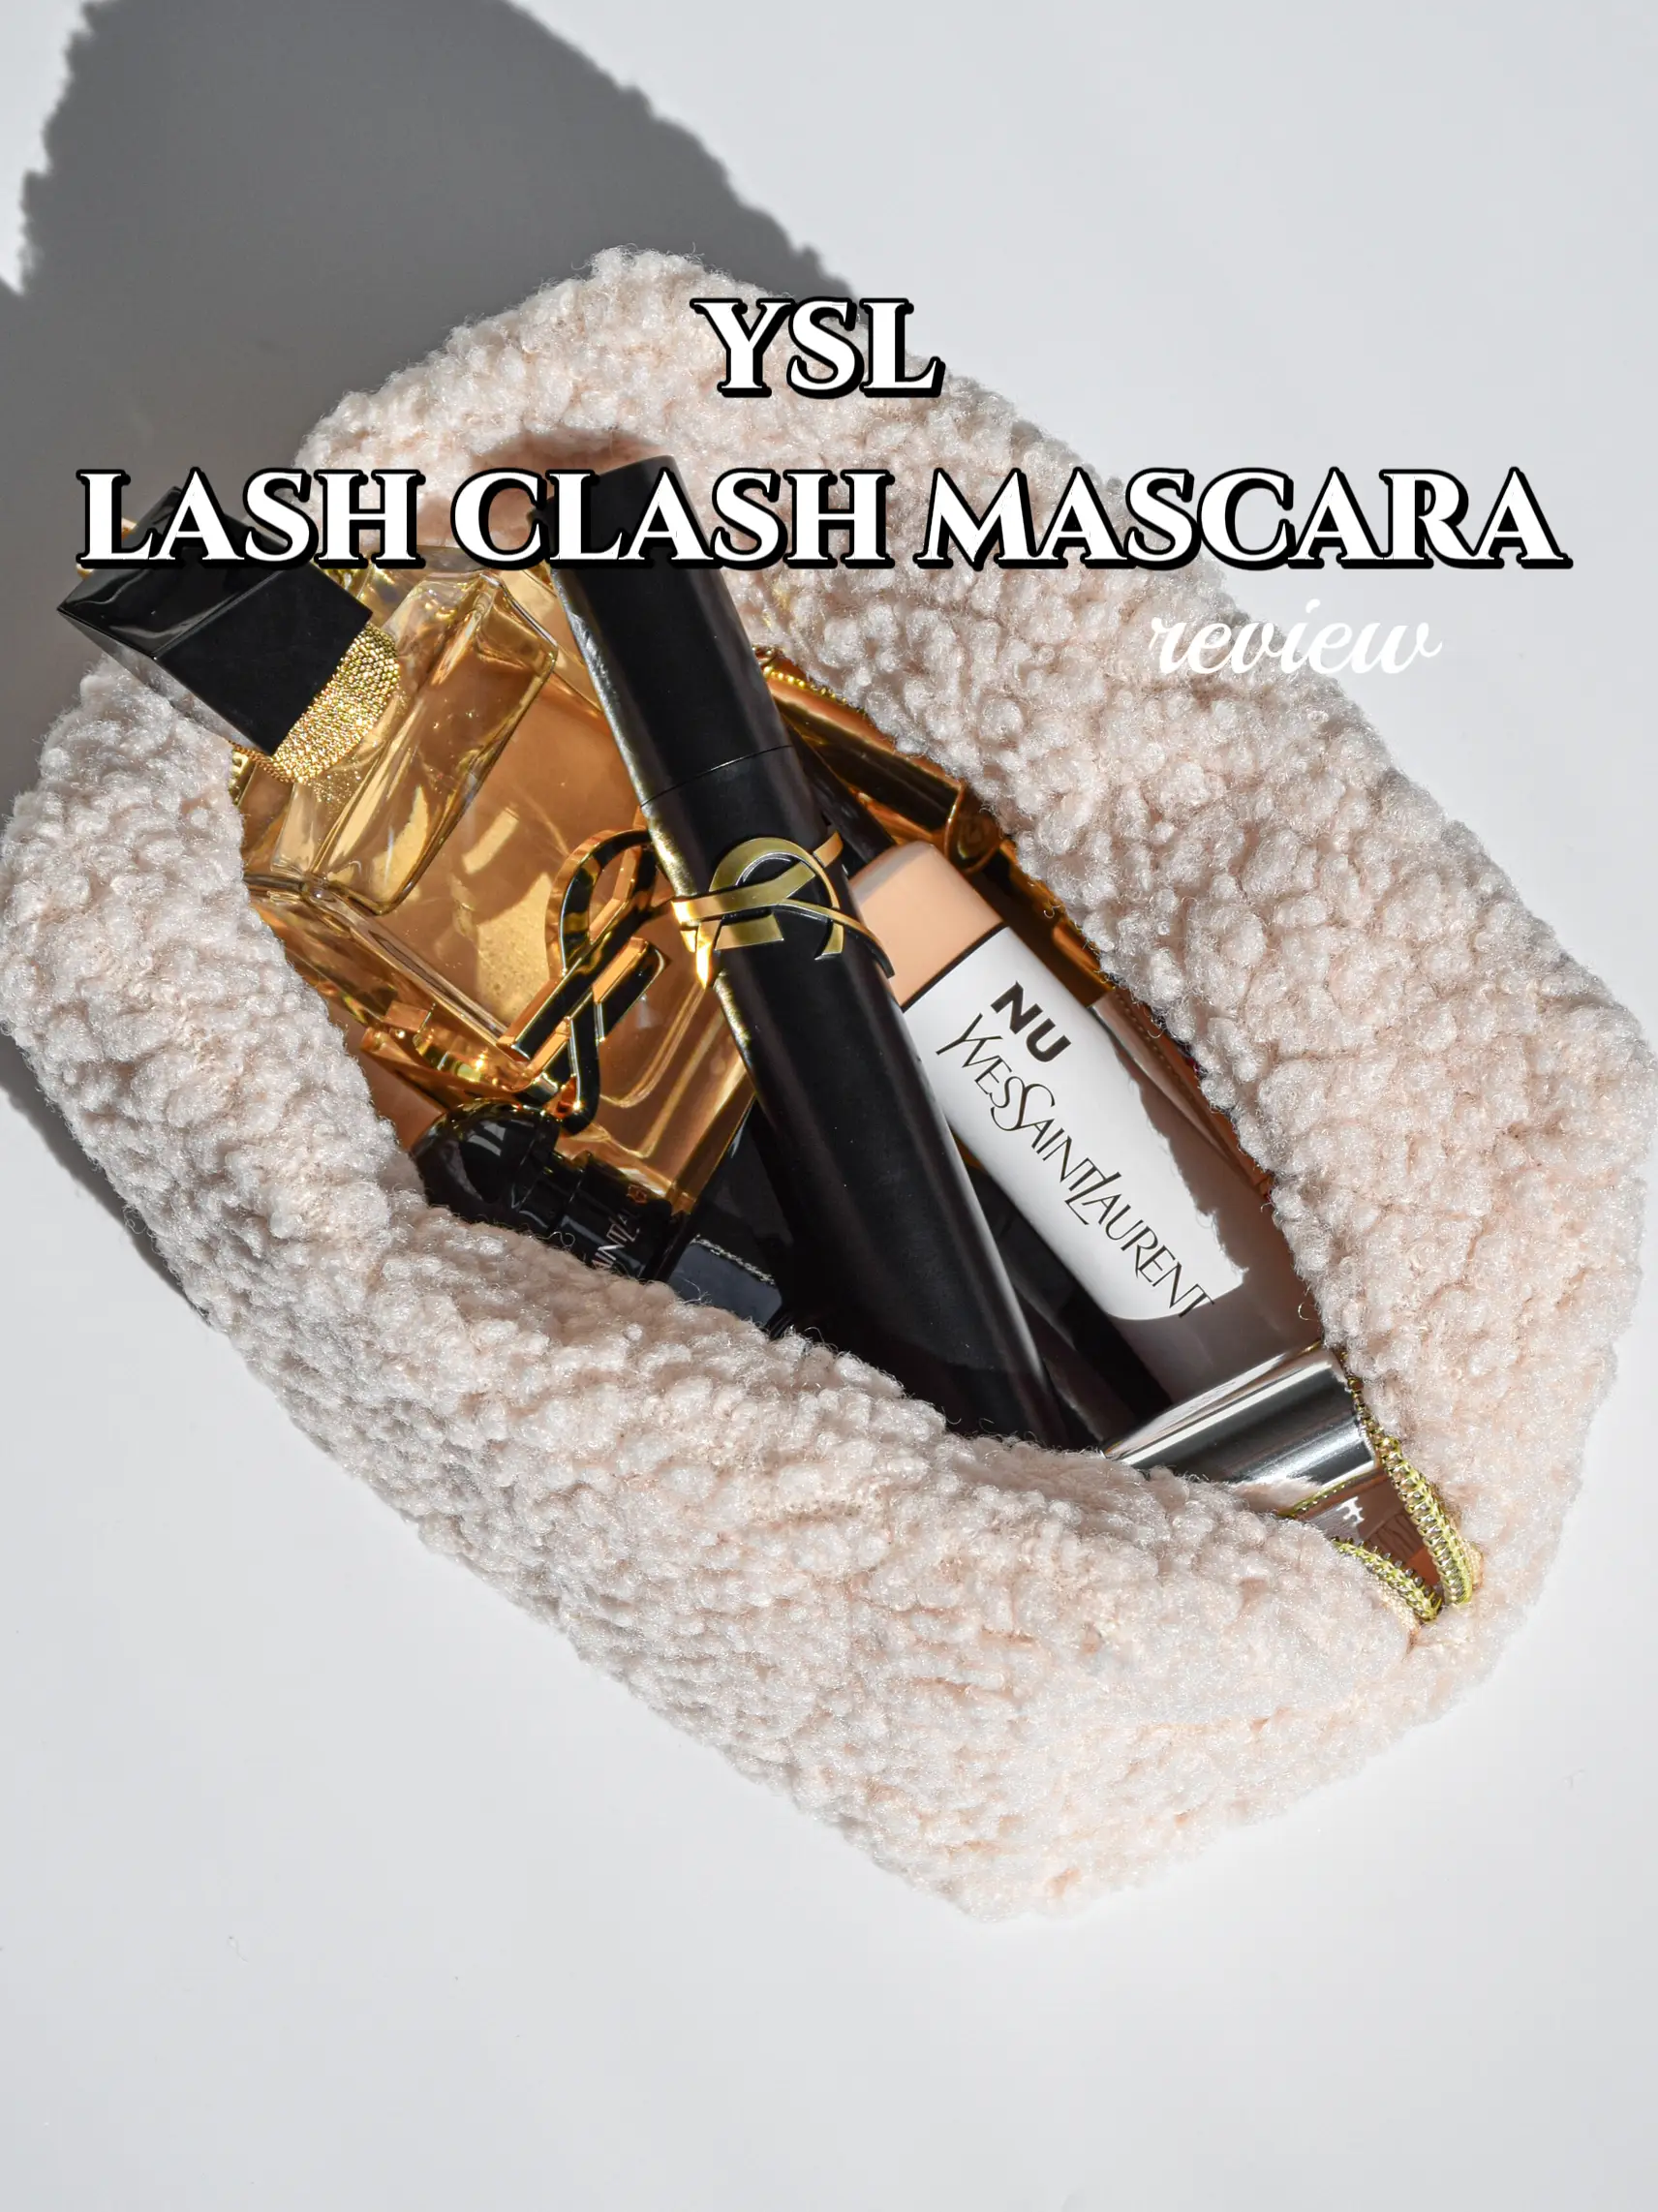 Lippy in London : YSL Lash Clash Mascara Review